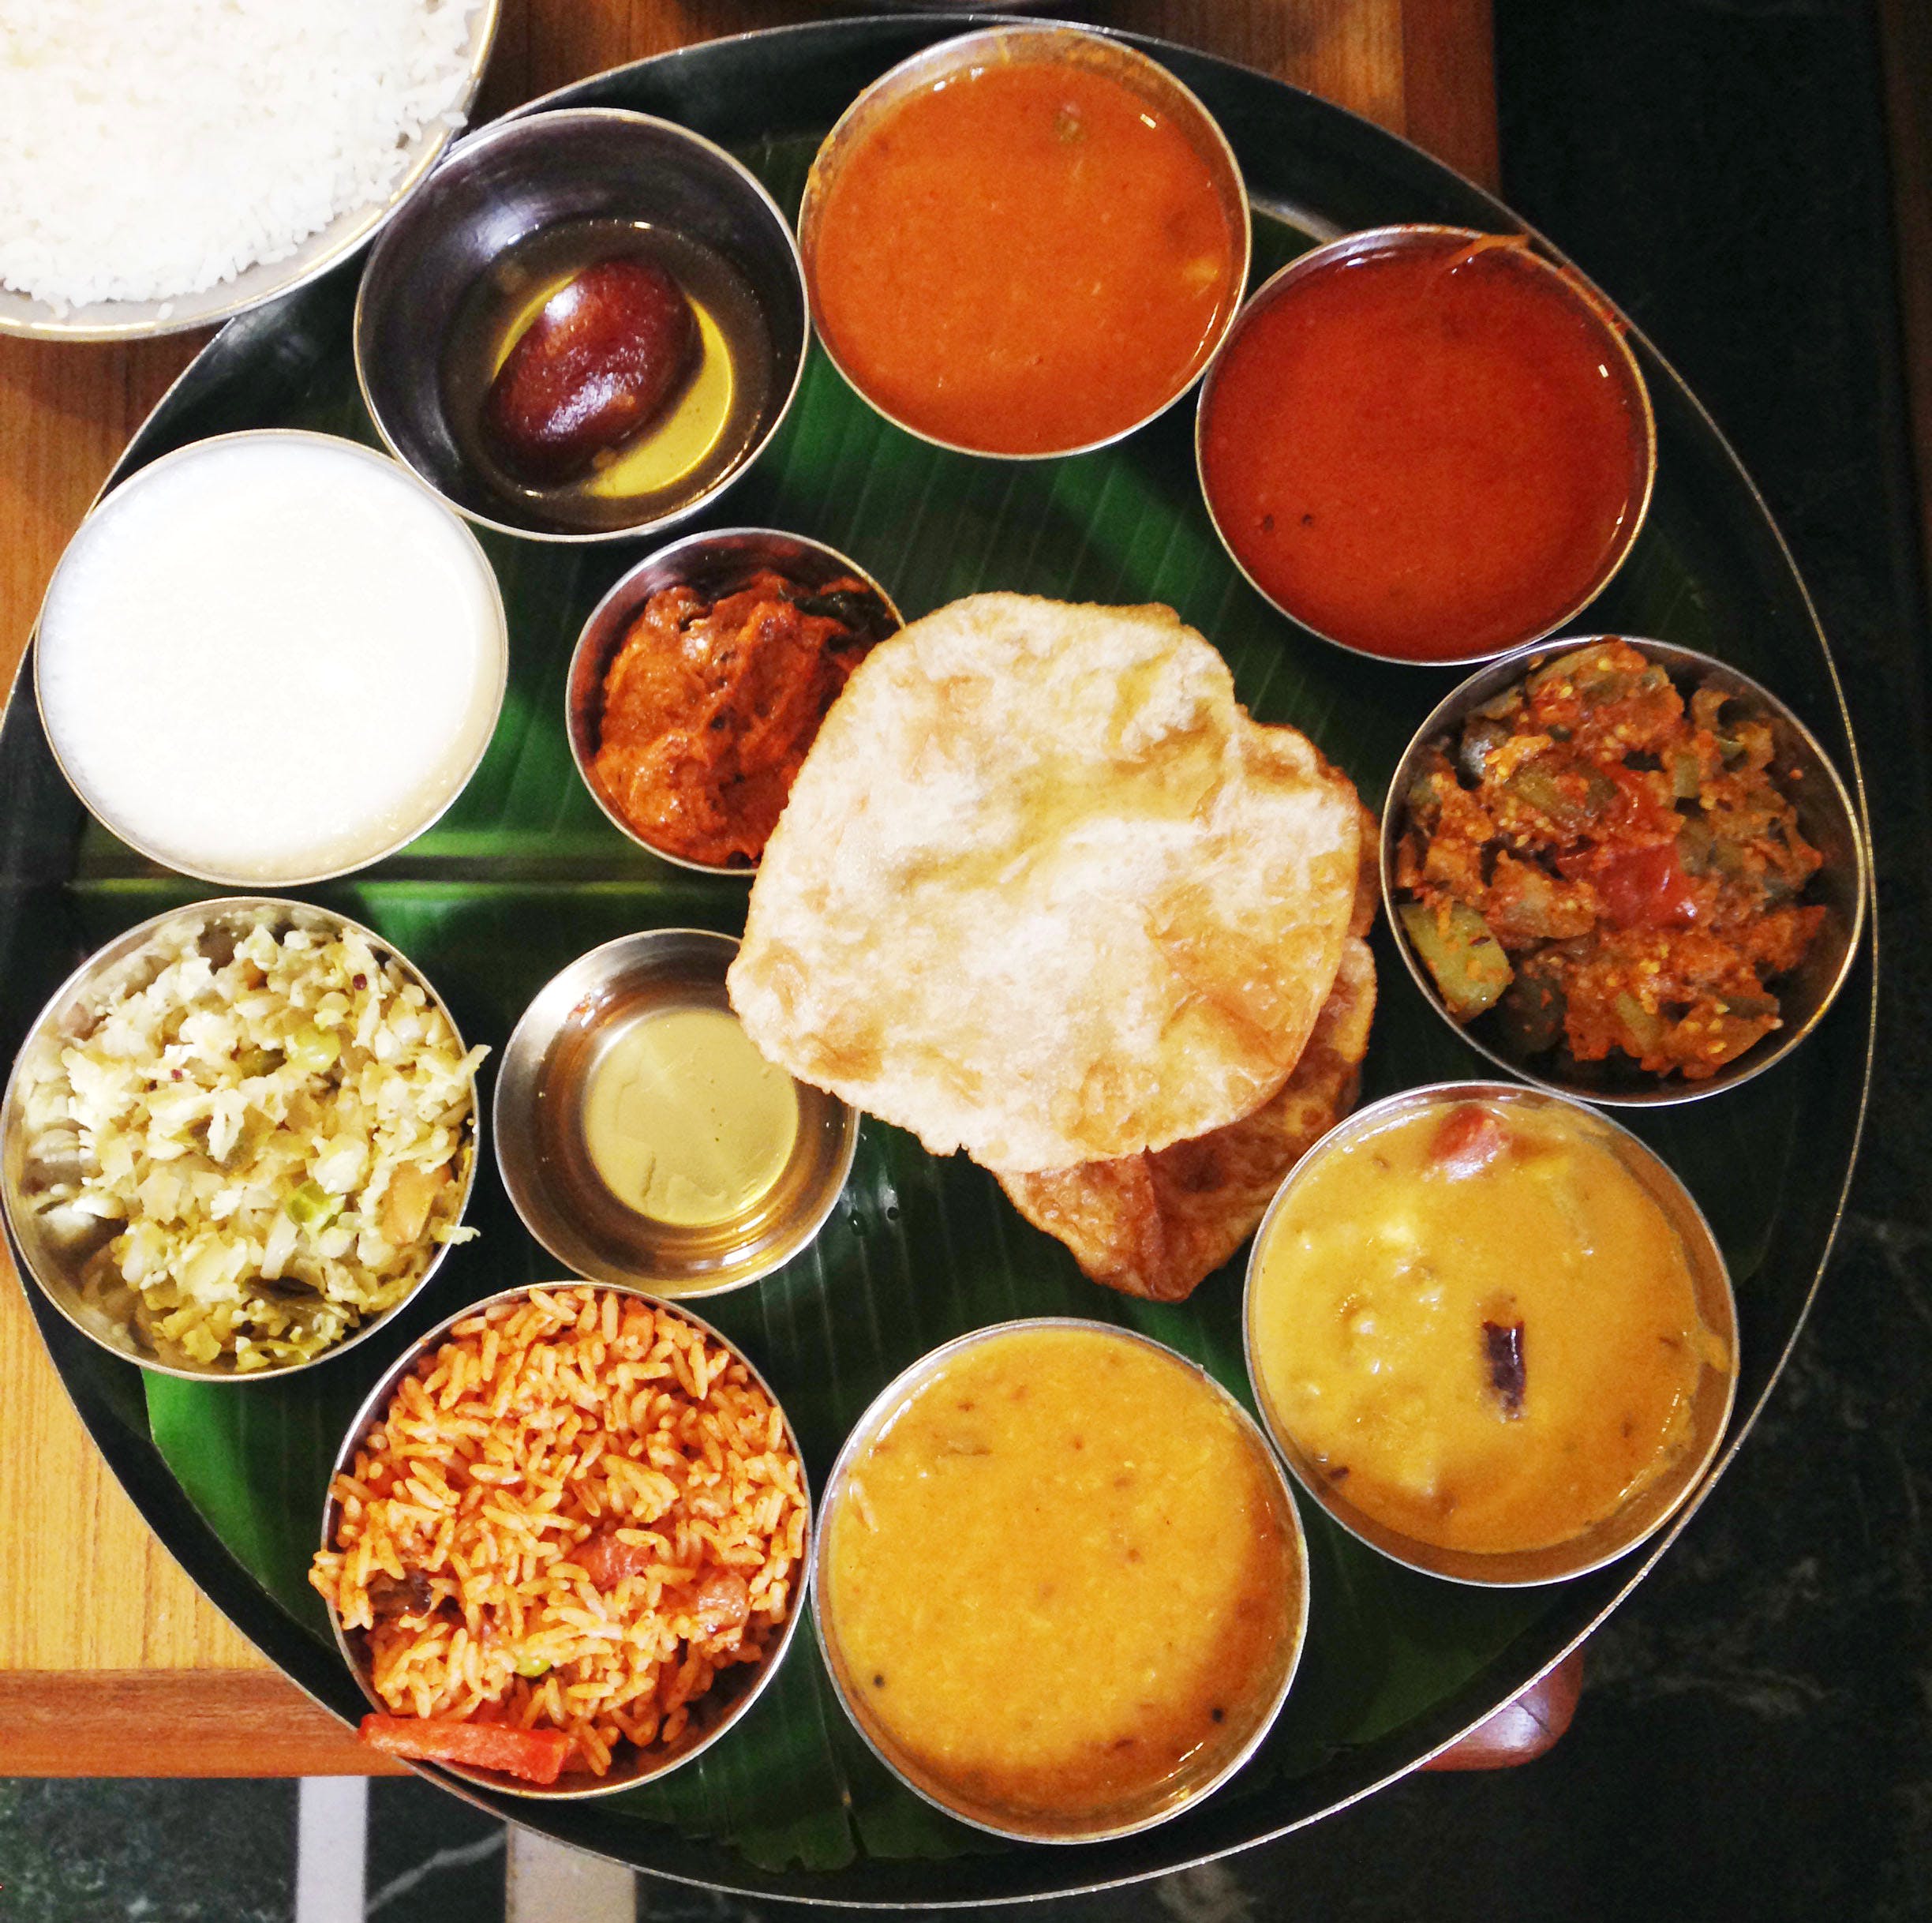 Dish,Food,Cuisine,Ingredient,Meal,Indian cuisine,Produce,Recipe,Comfort food,Rajasthani cuisine